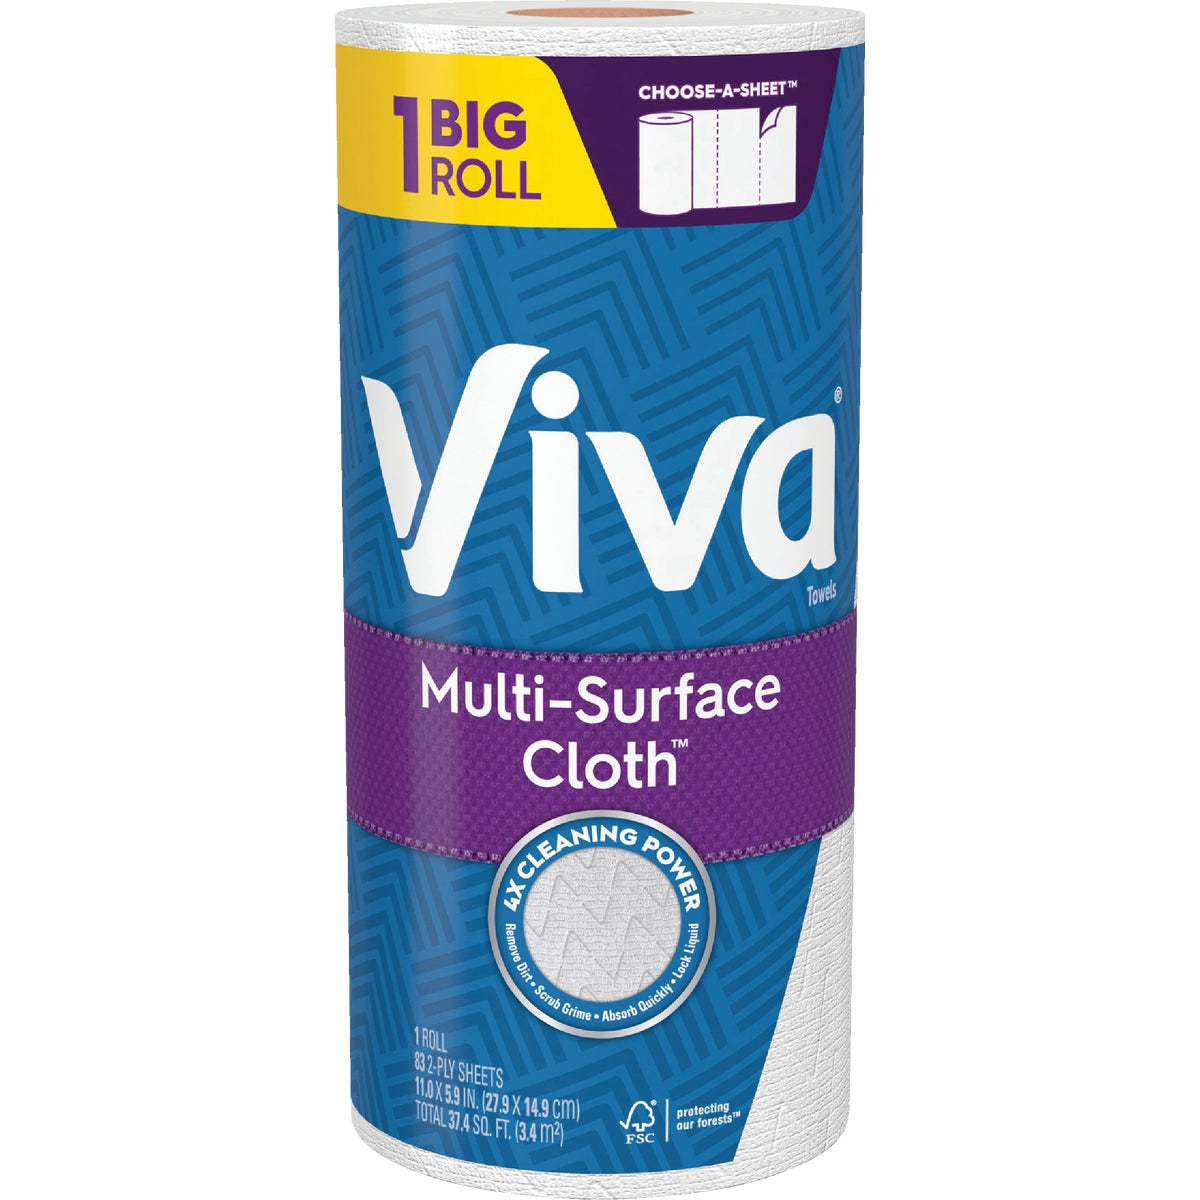 Multi-Surface Cloth Viva 49410 Viva Multi-Surface Cloth Paper Towel (1 Roll) 49410 Pack of 24